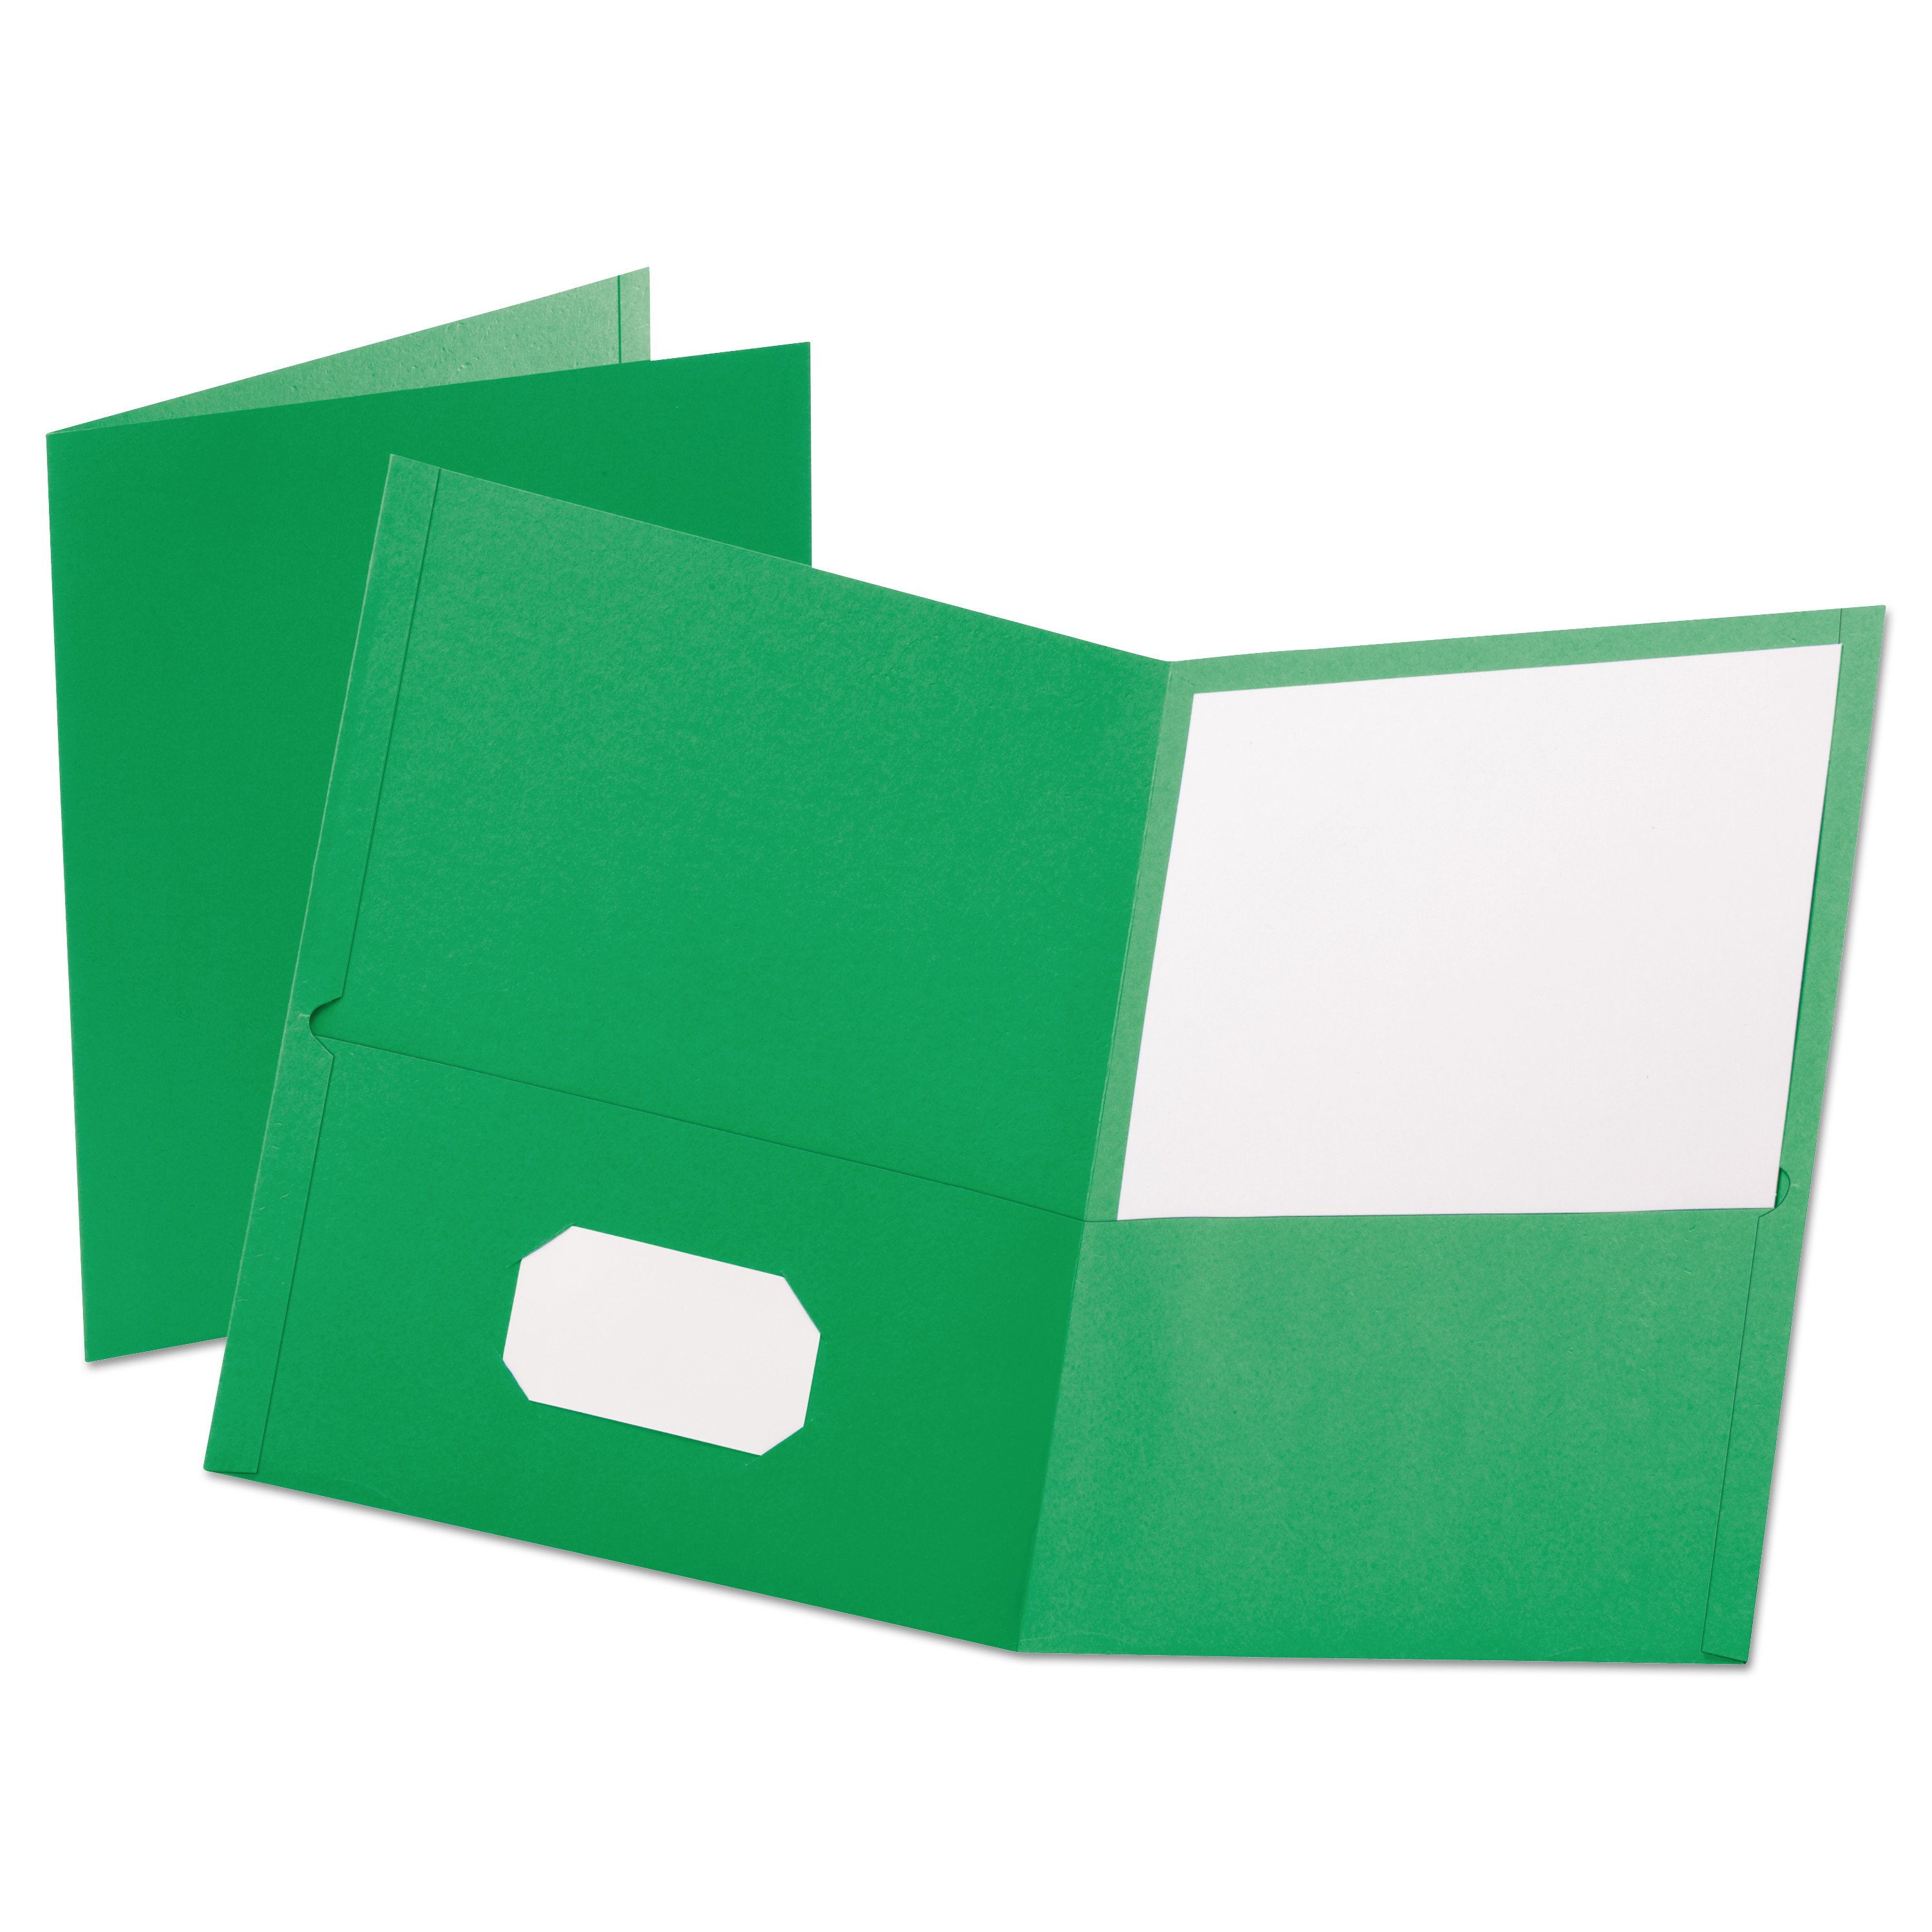  Oxford 57573 Leatherette Two Pocket Portfolio, 8 1/2 x 11, Green, 10/PK (OXF57573) 